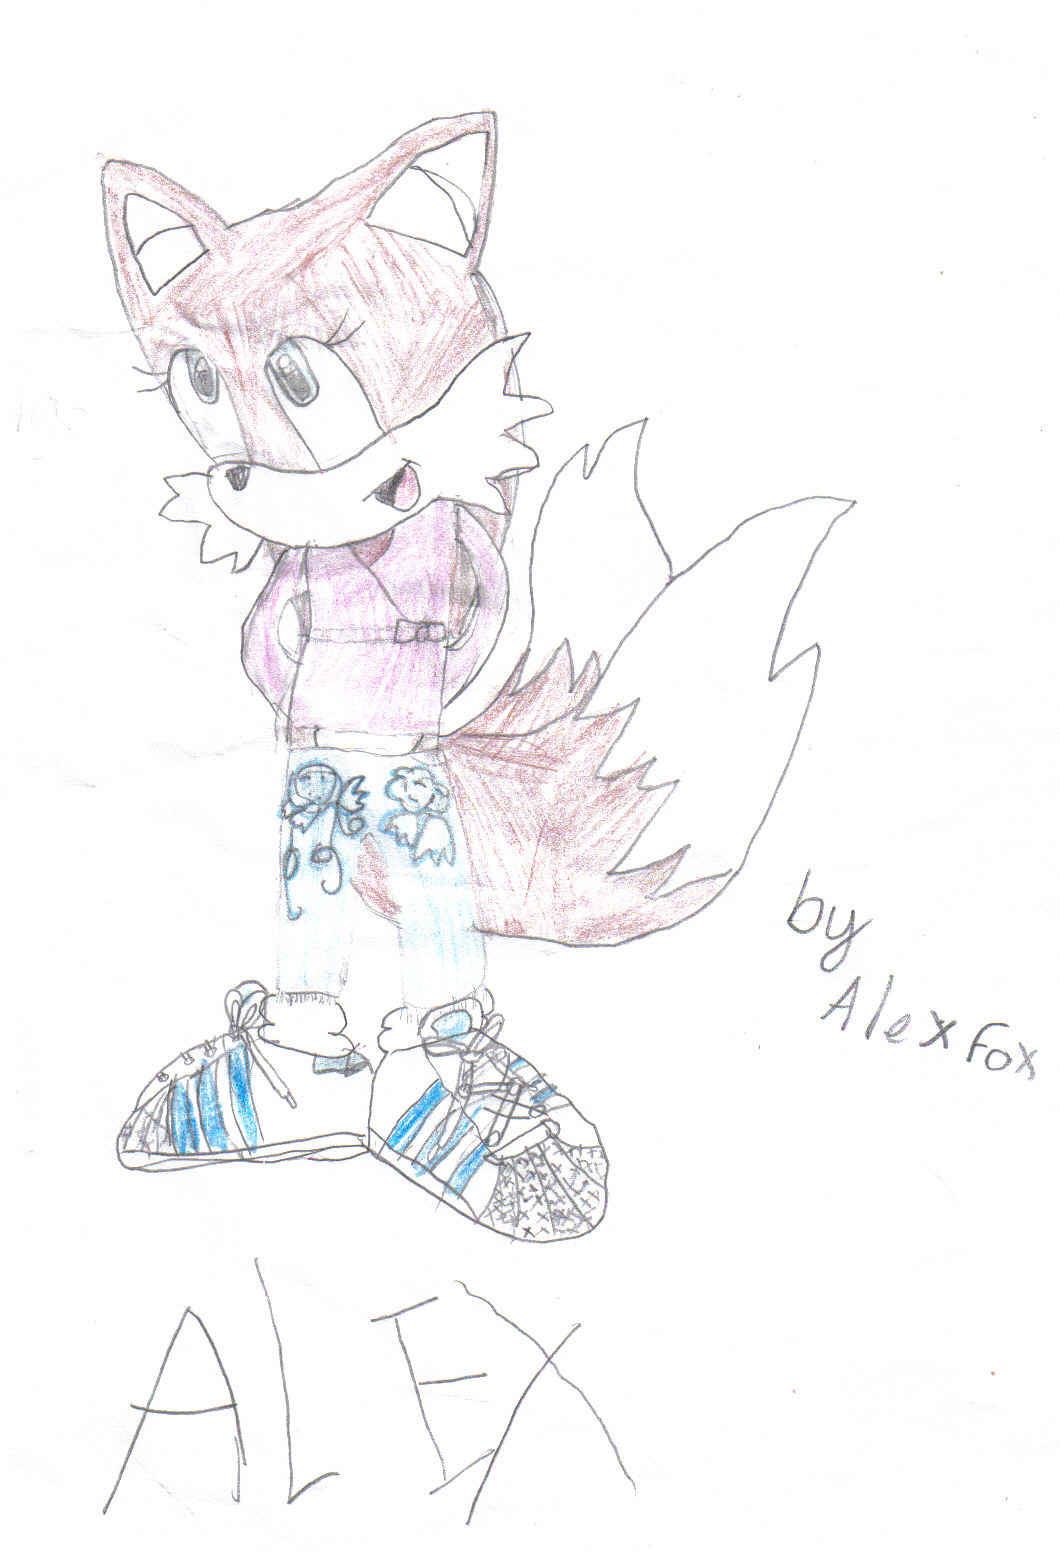 Alex the Fox by AlexFox11